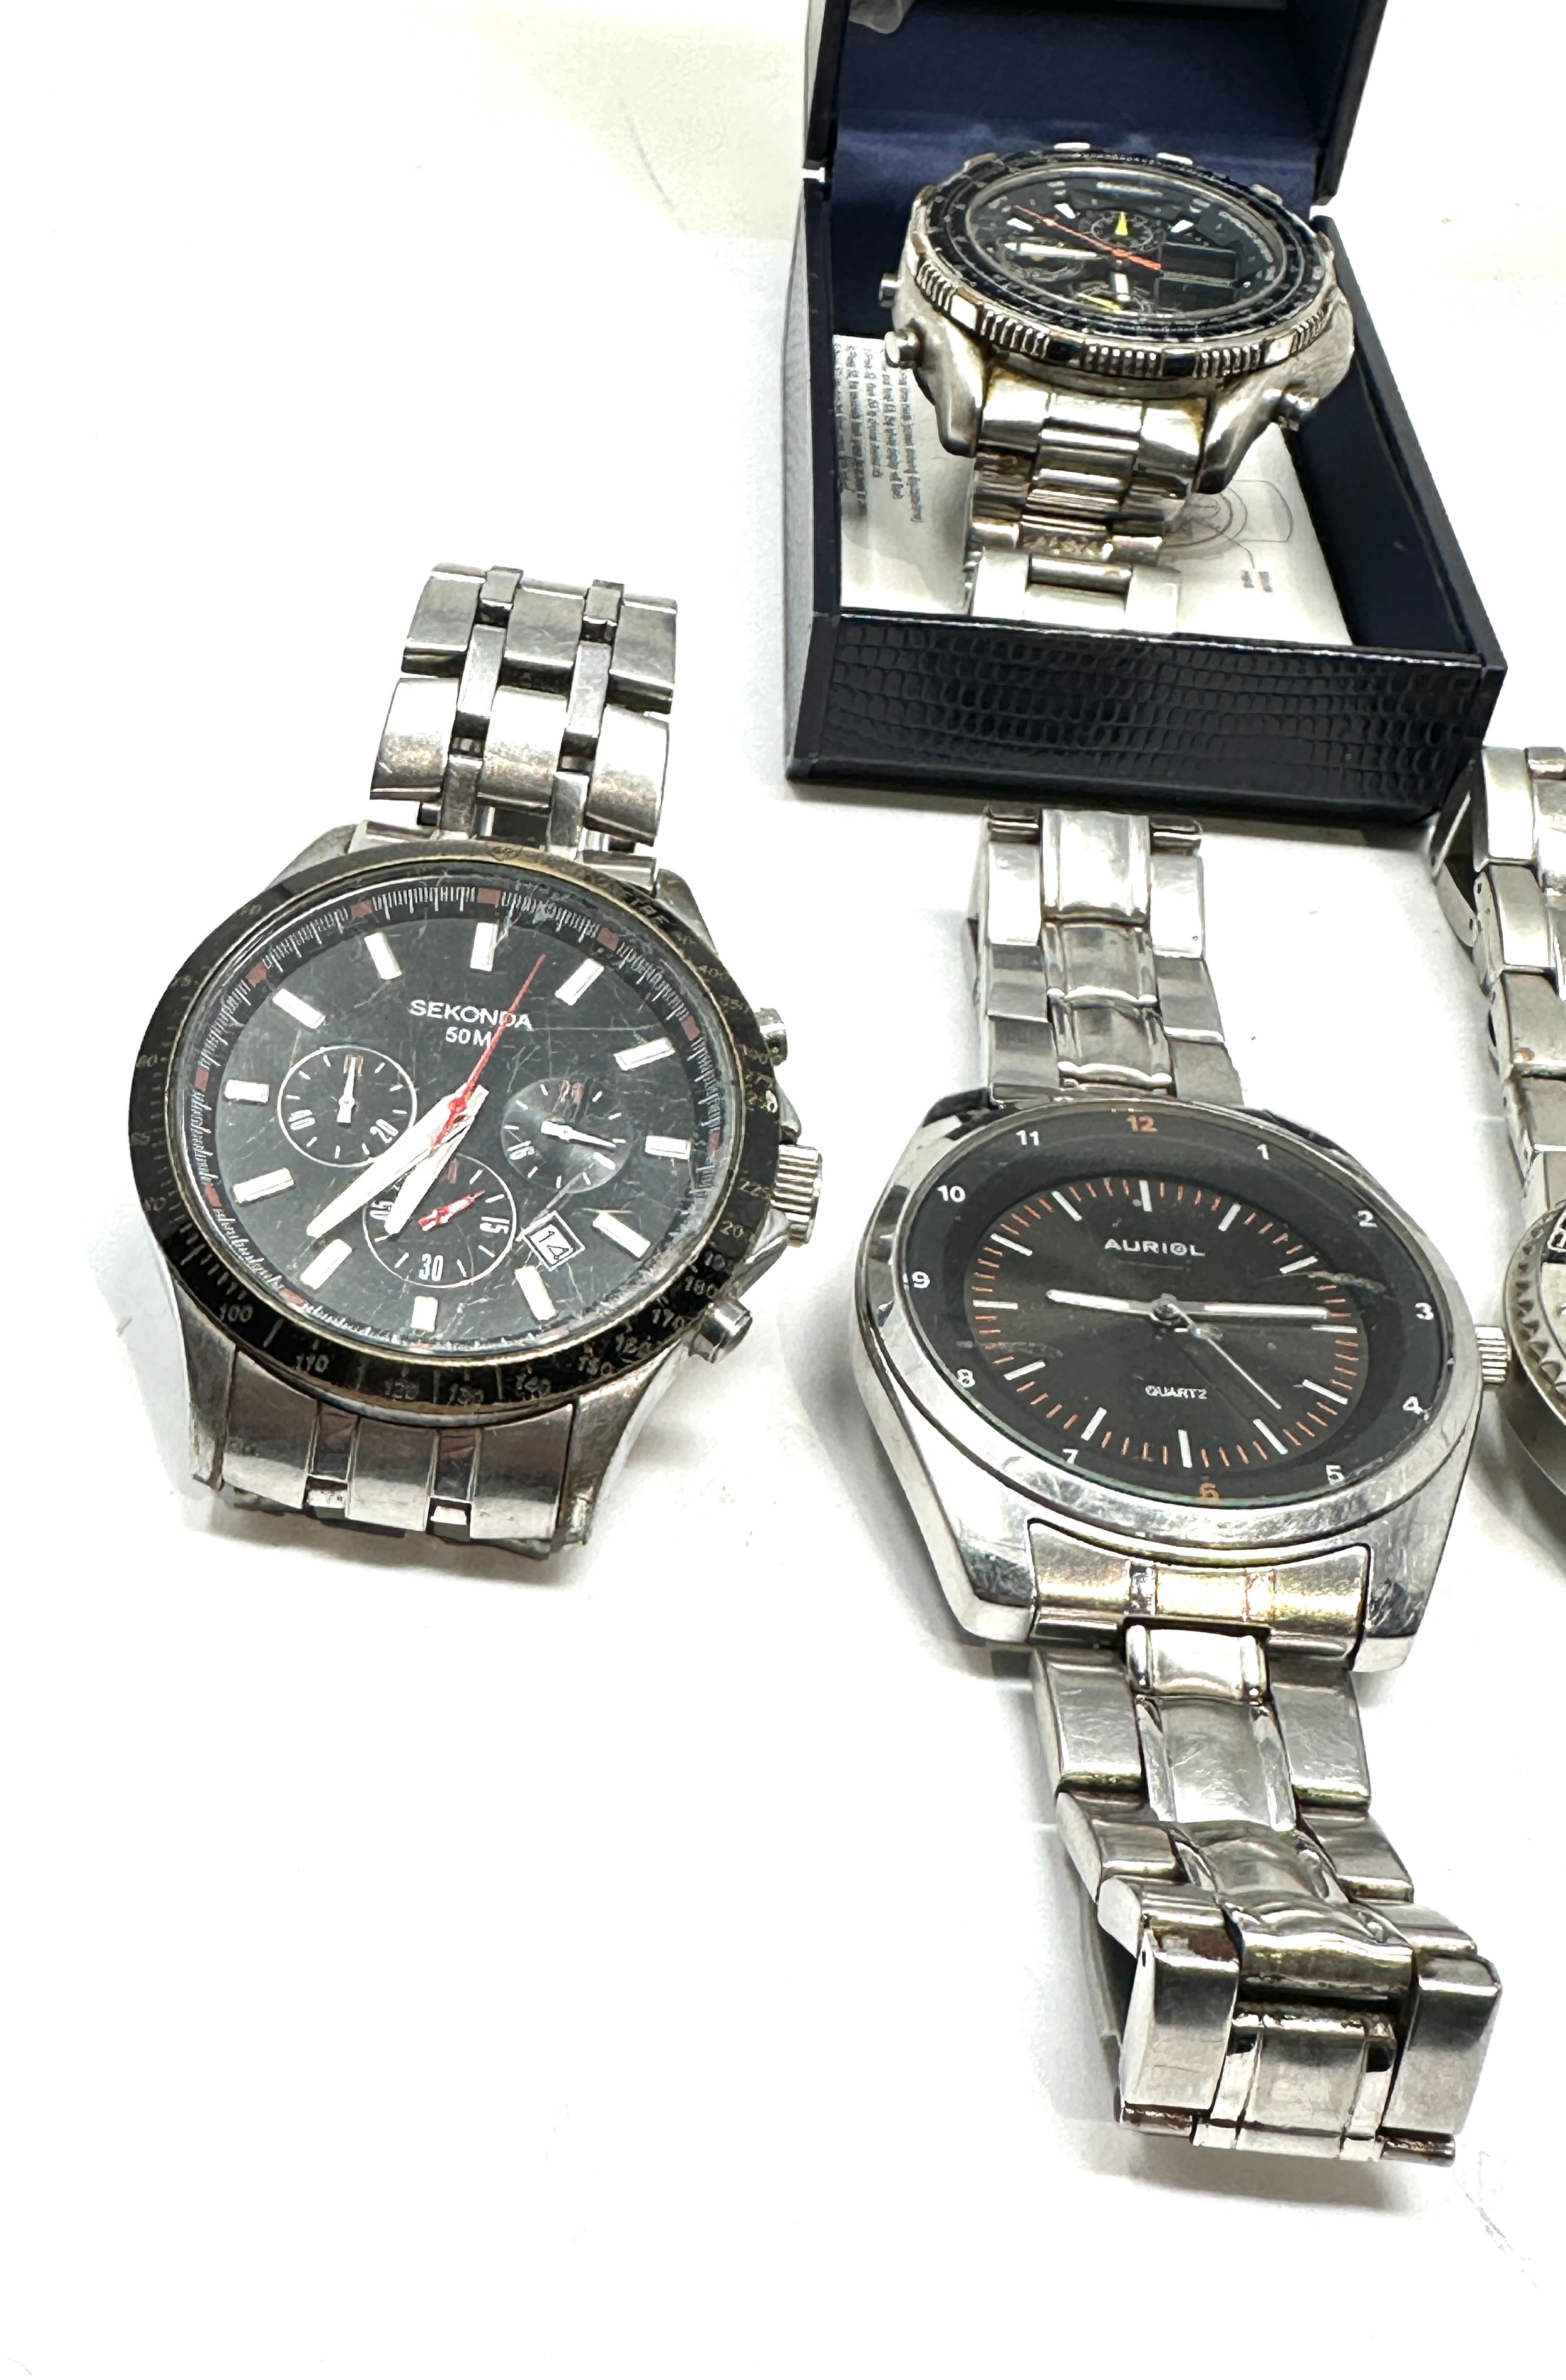 selection of quartz chronograph etc wristwatches inc sekonda auriol ralph klien etc prob need new - Image 2 of 4